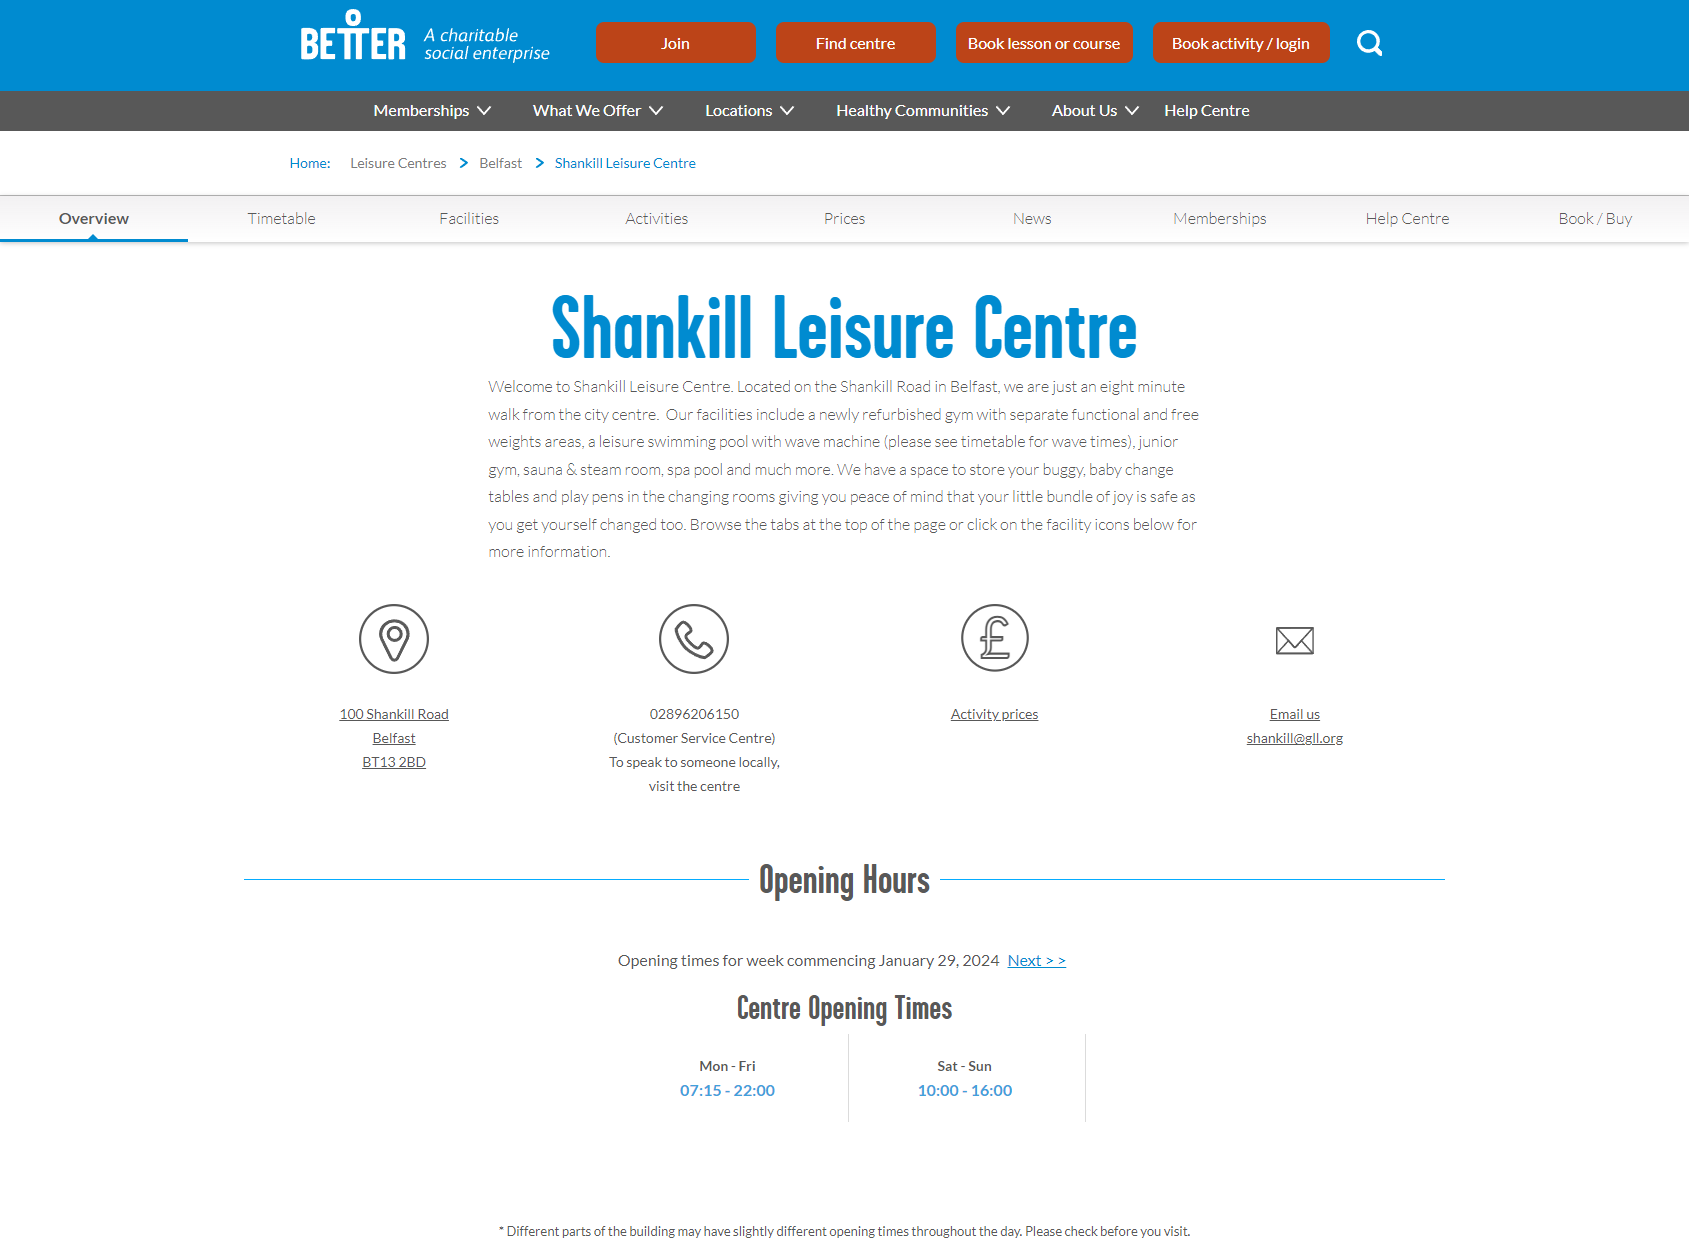 Shankill Leisure Centre